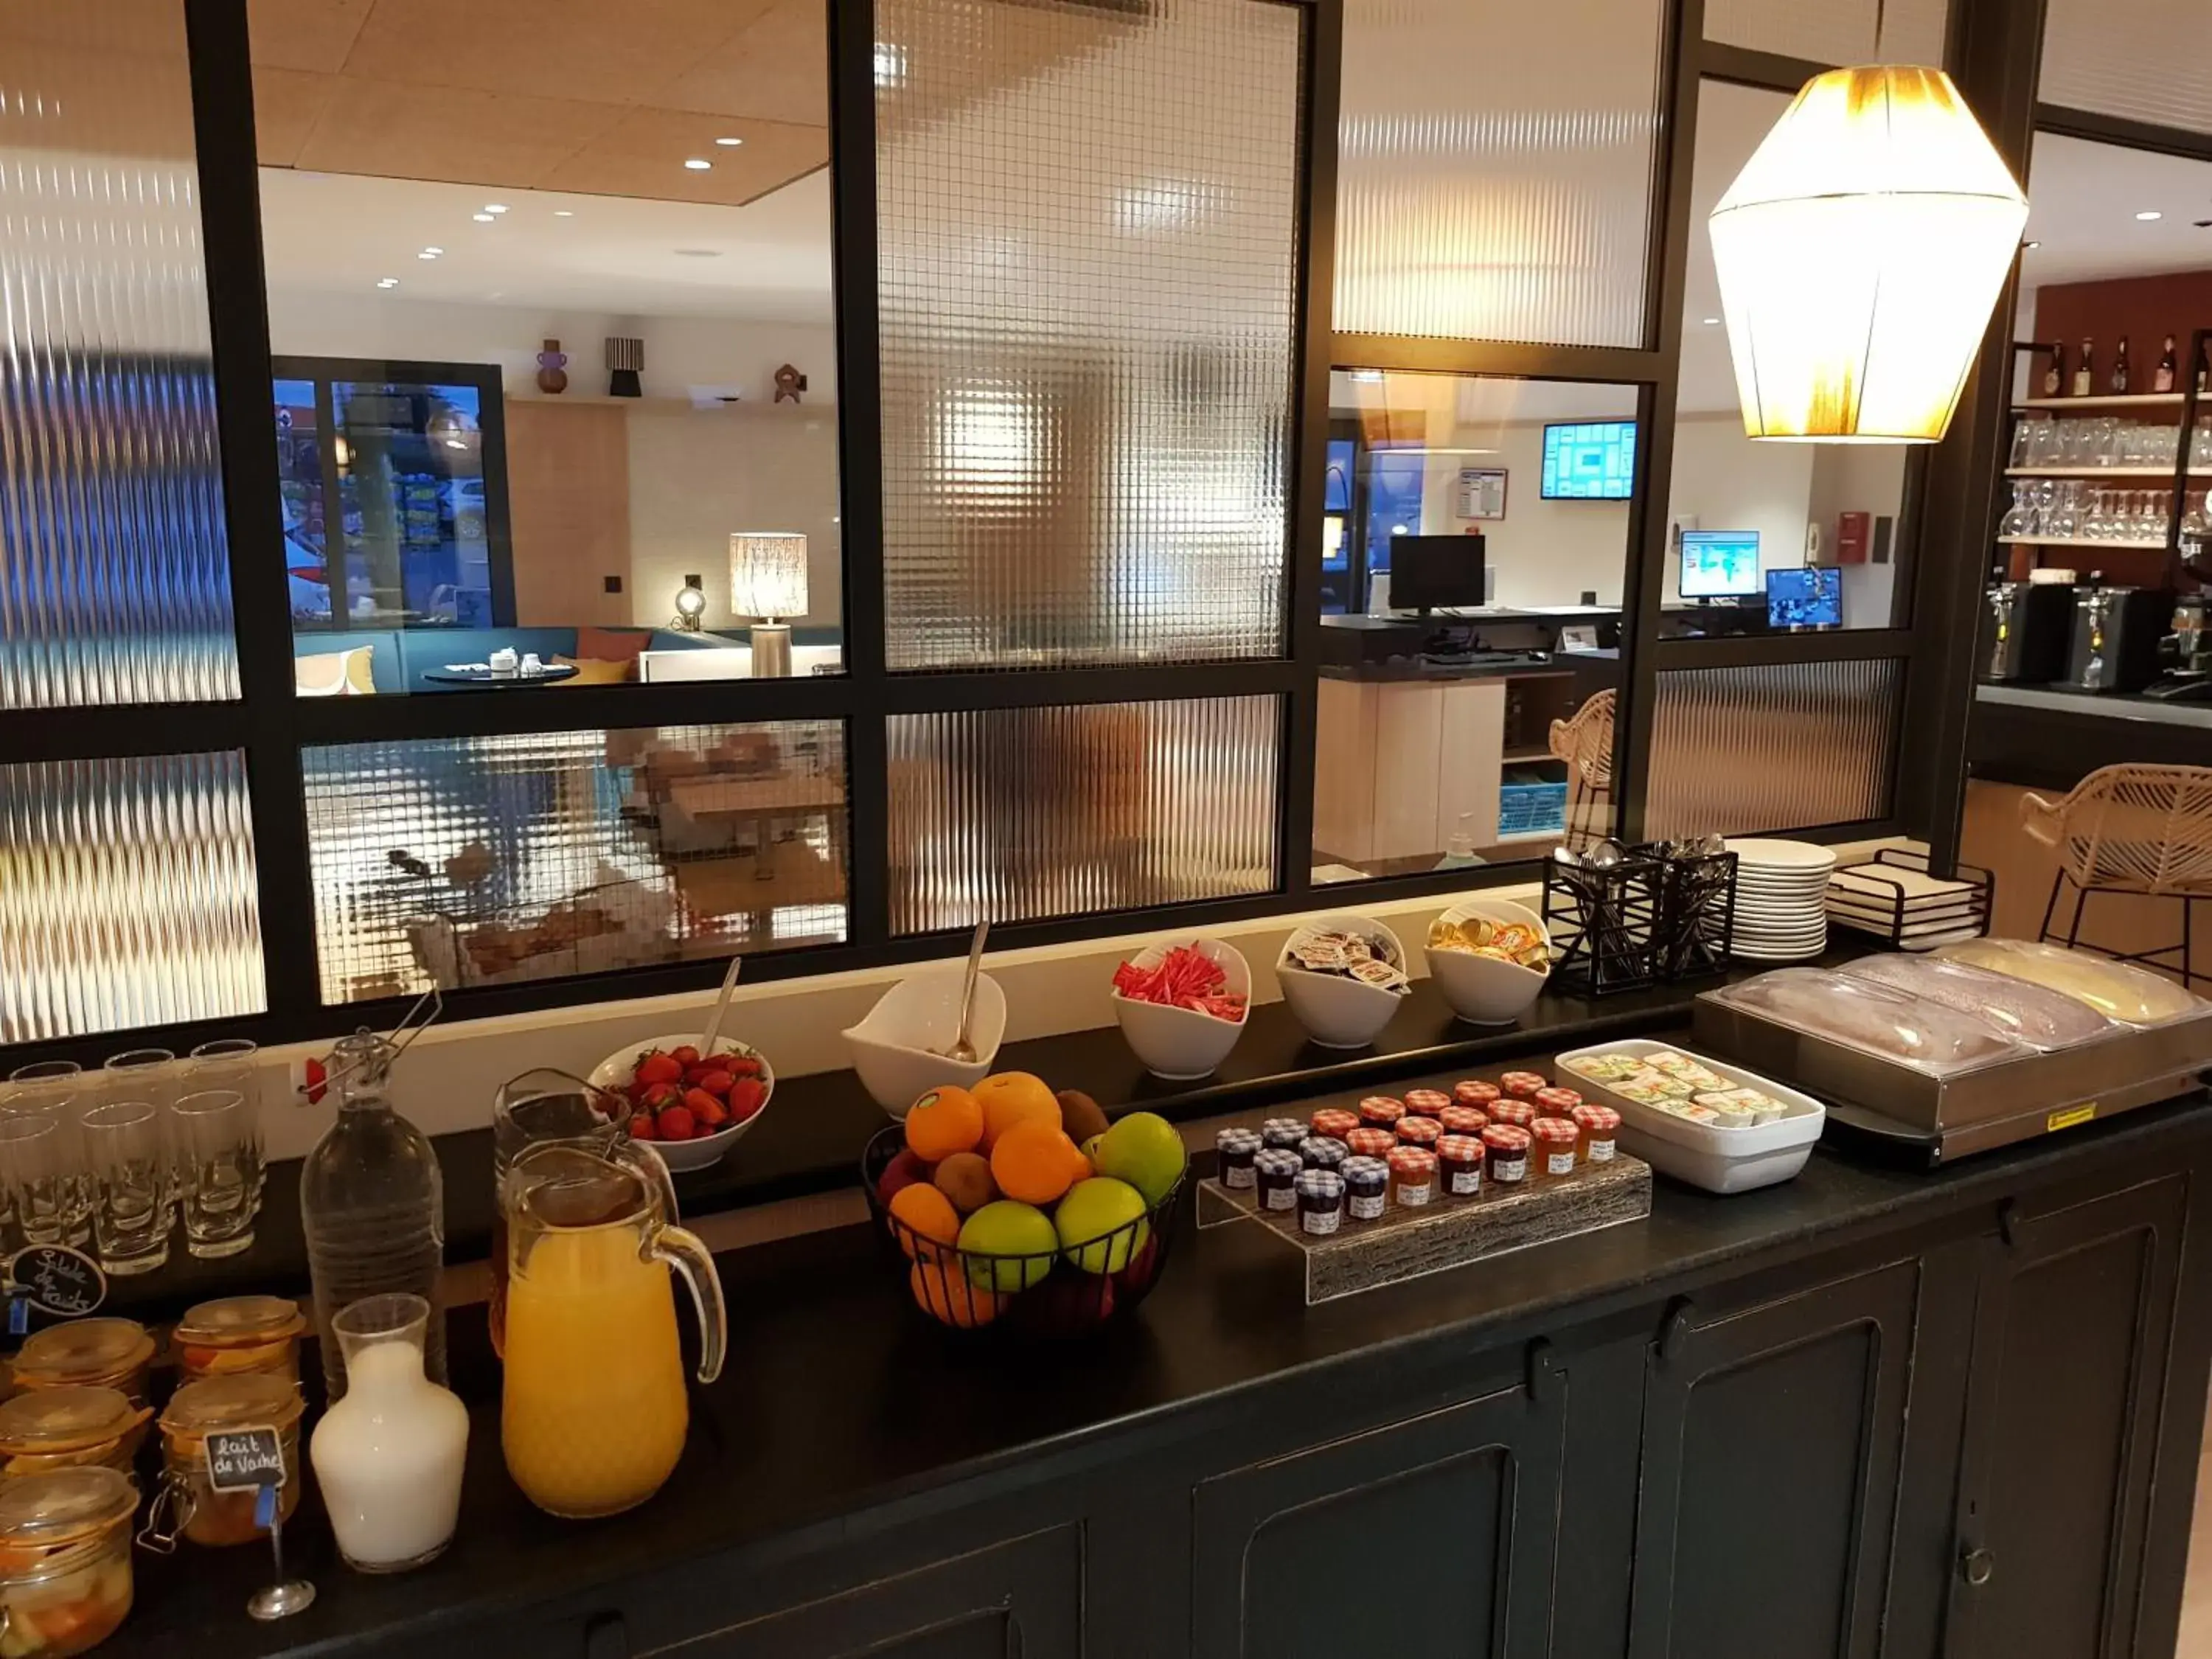 Buffet breakfast in Kyriad Carcassonne - Aéroport